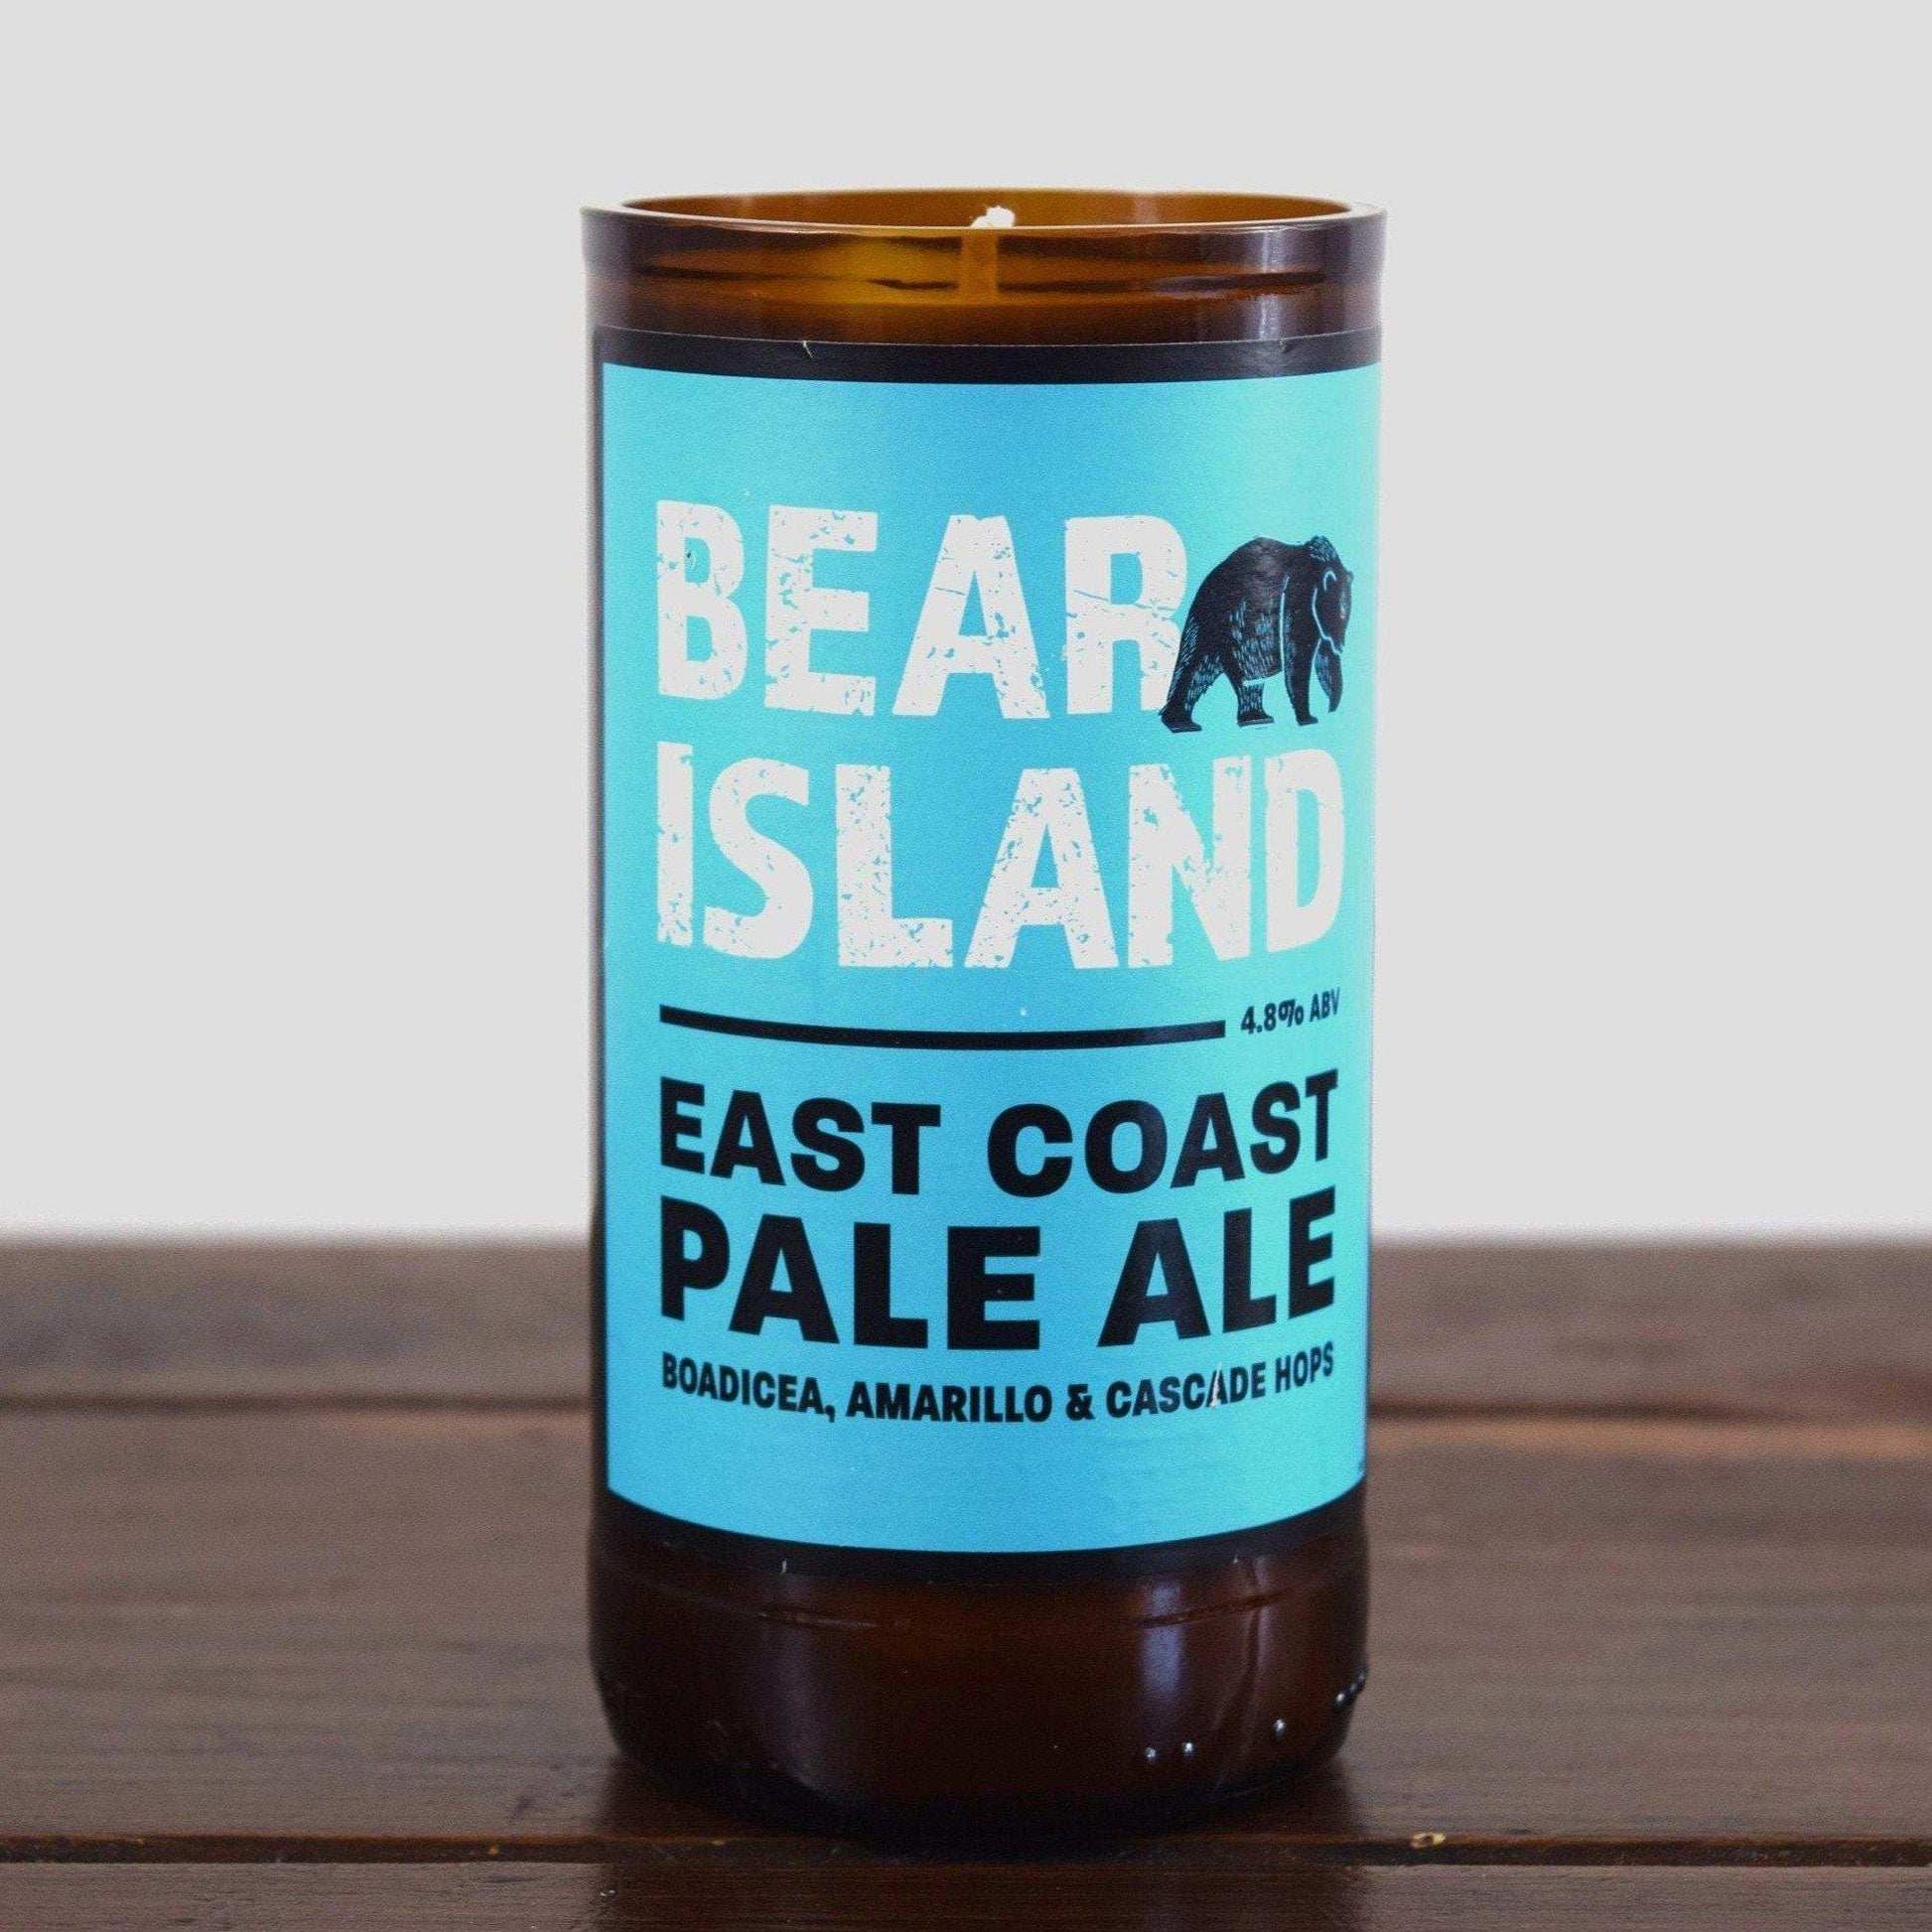 Bear Island East Coast Pale Ale Beer Bottle Candle Beer & Ale Bottle Candles Adhock Homeware